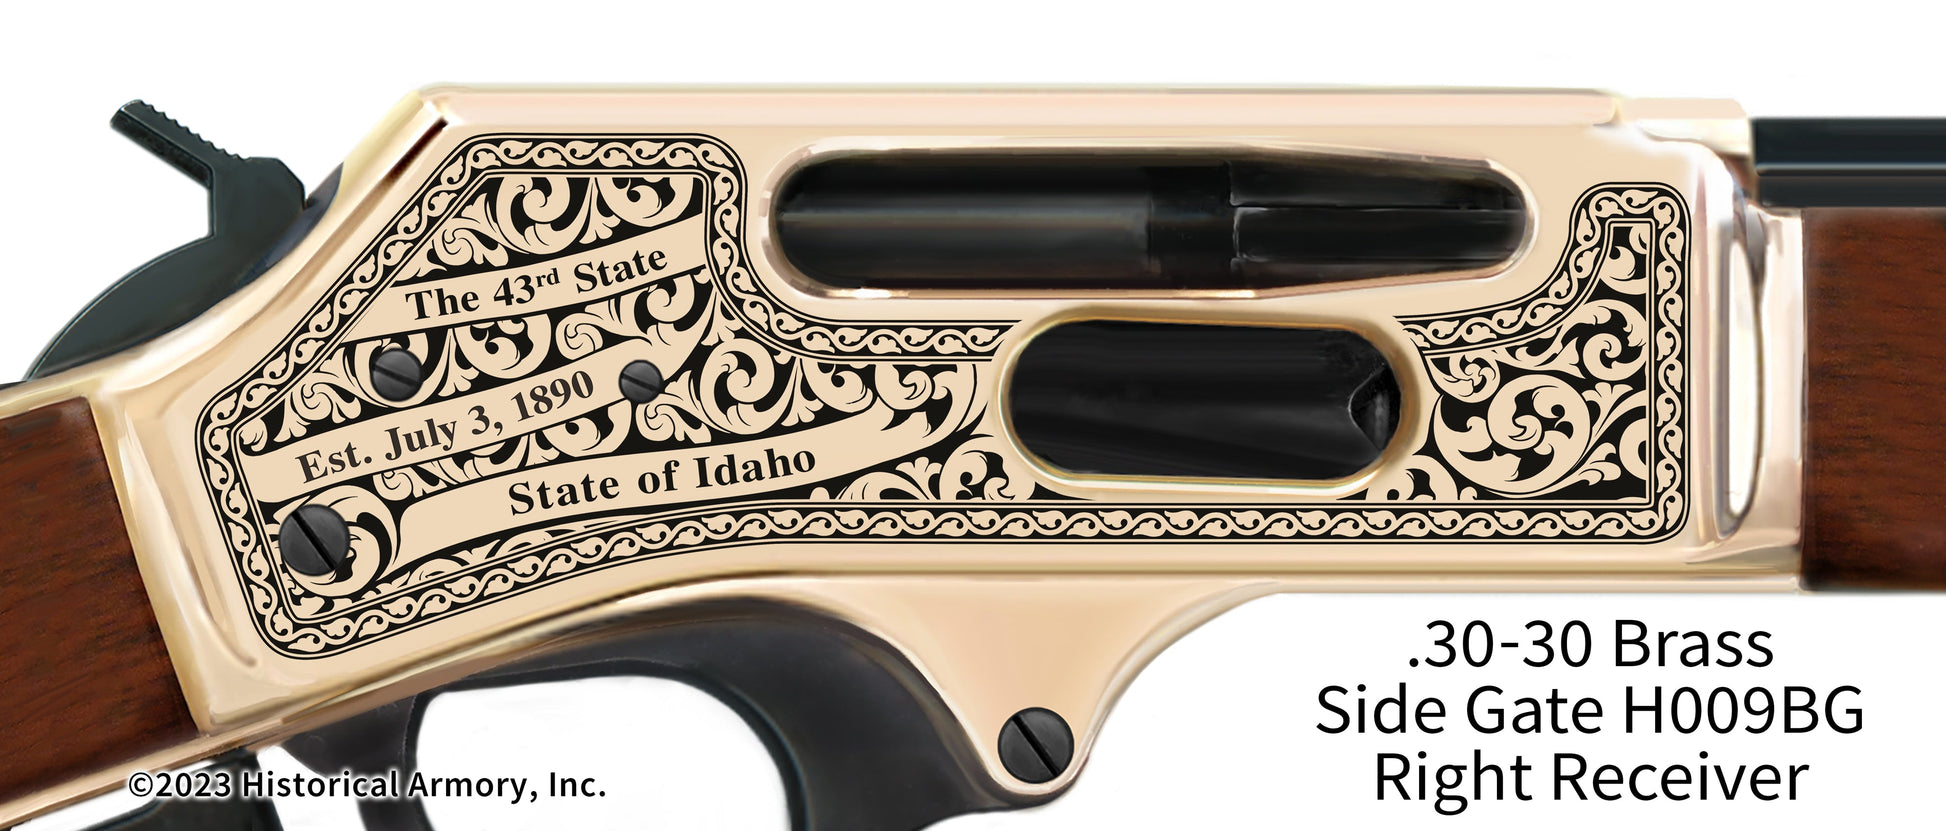 Blaine County Idaho Engraved Henry .30-30 Brass Side Gate Rifle